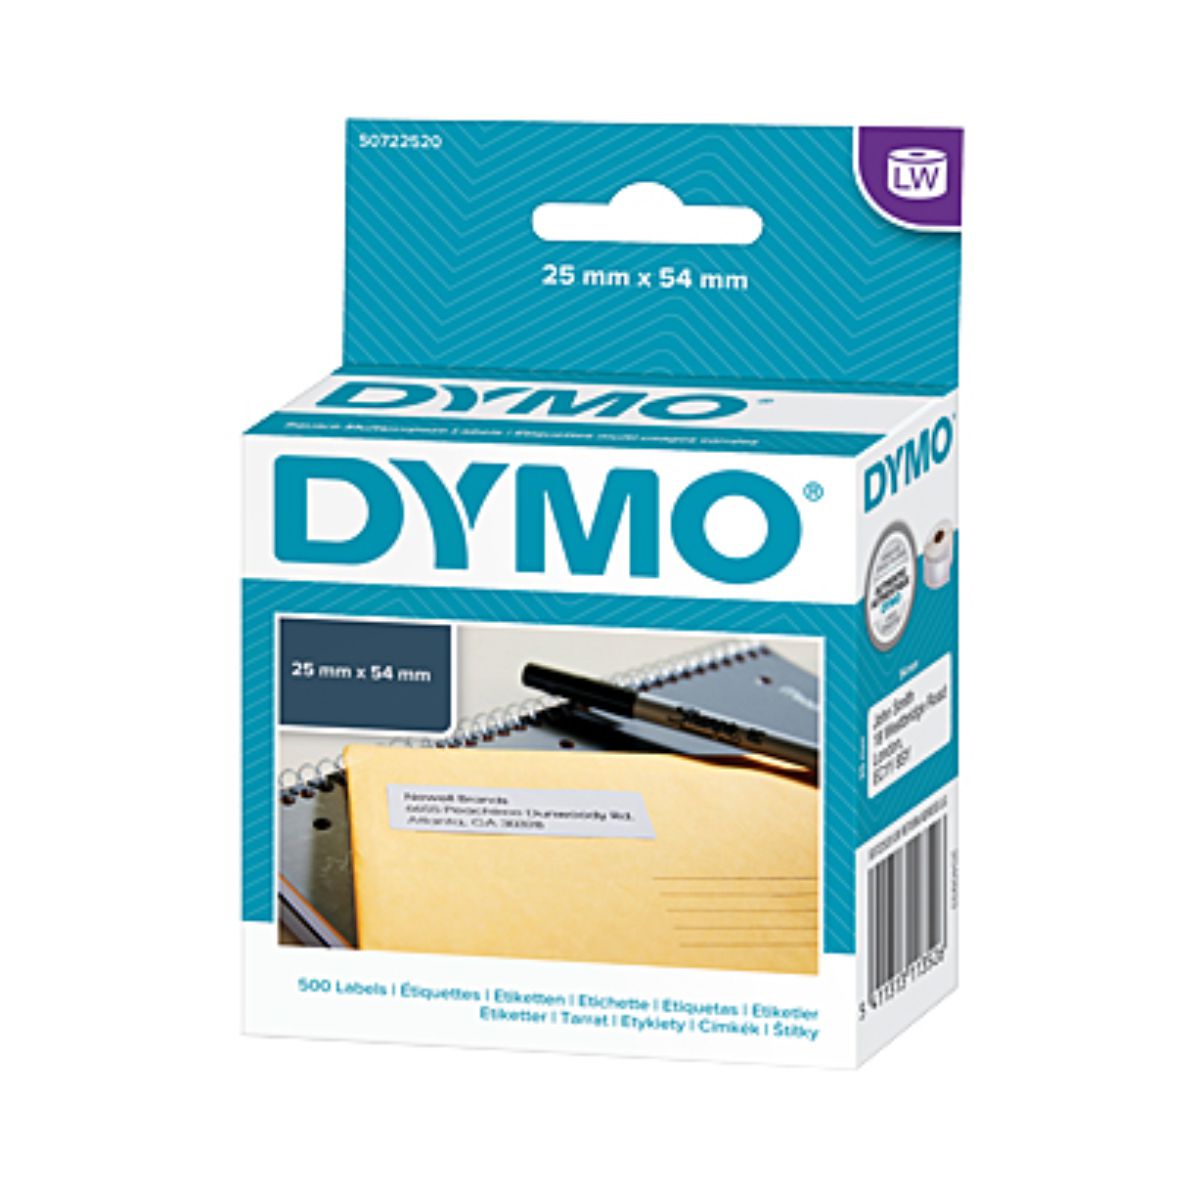 dymo labels online